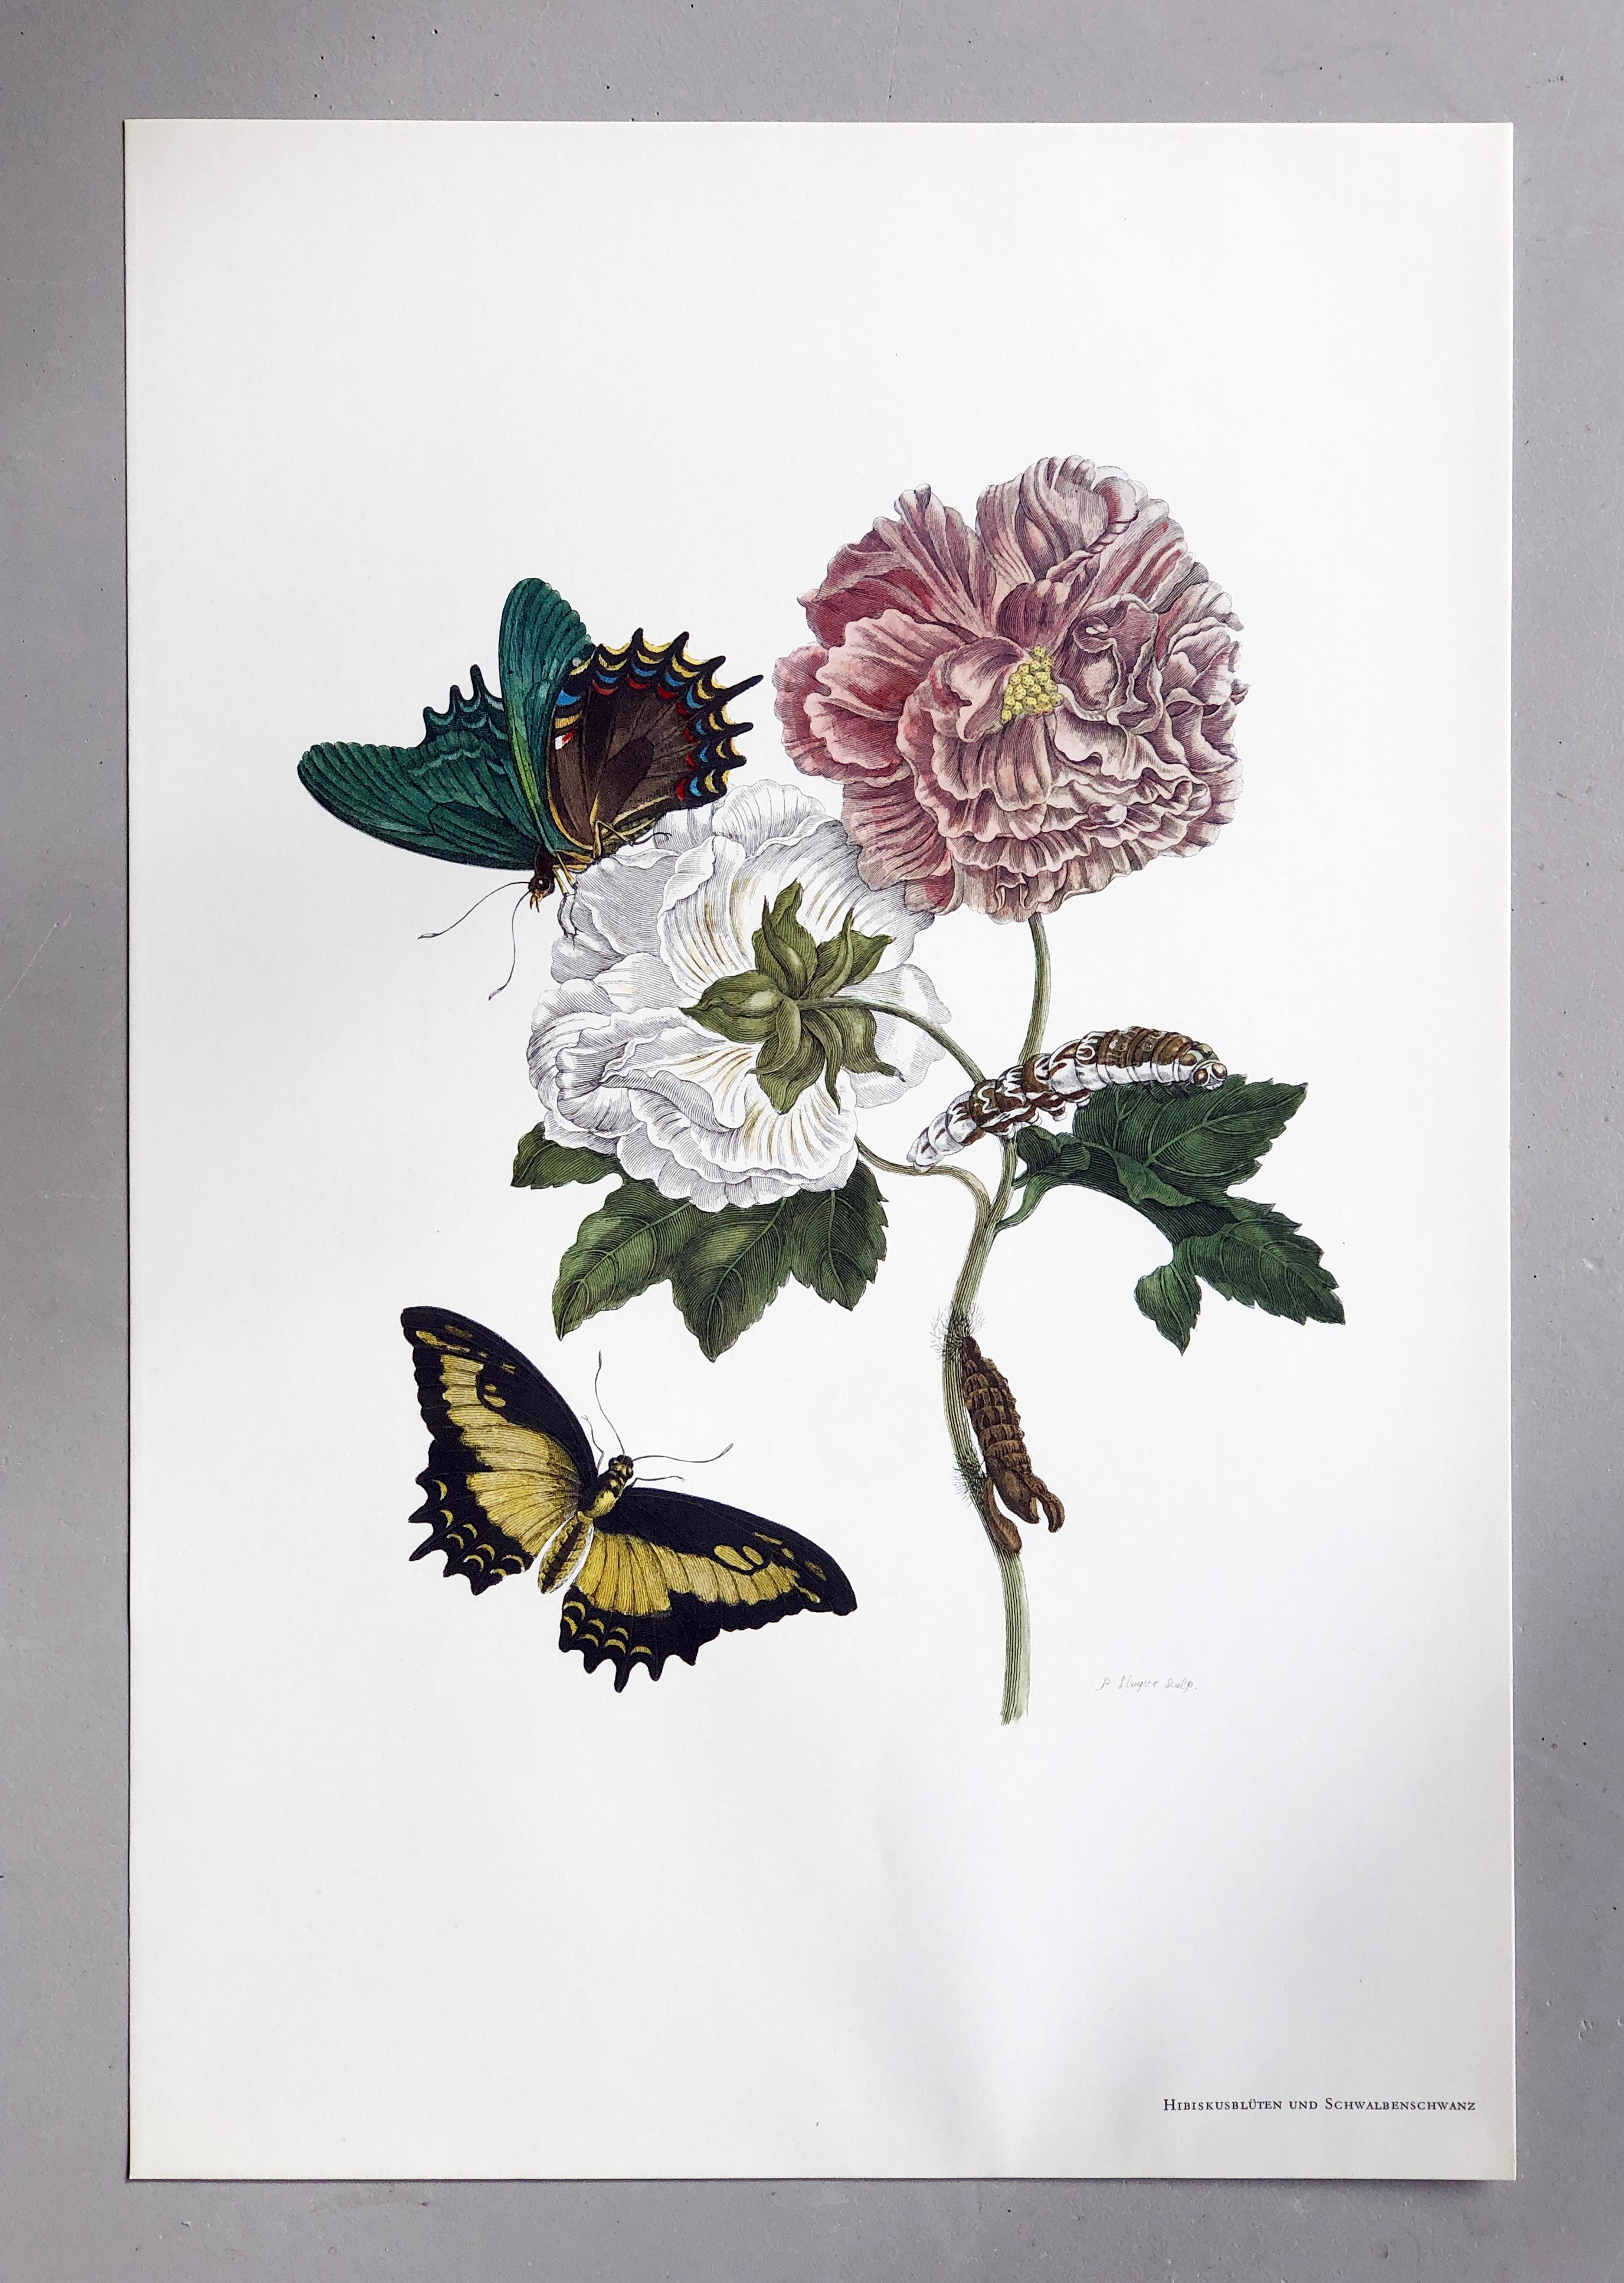 Autre Maria Sibylla Merian - P. Sluyter - Fleurs d'hibiscus et queue de cygne Nr.31 en vente